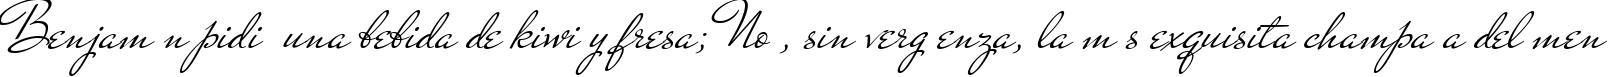 Пример написания шрифтом Nicoletta script текста на испанском